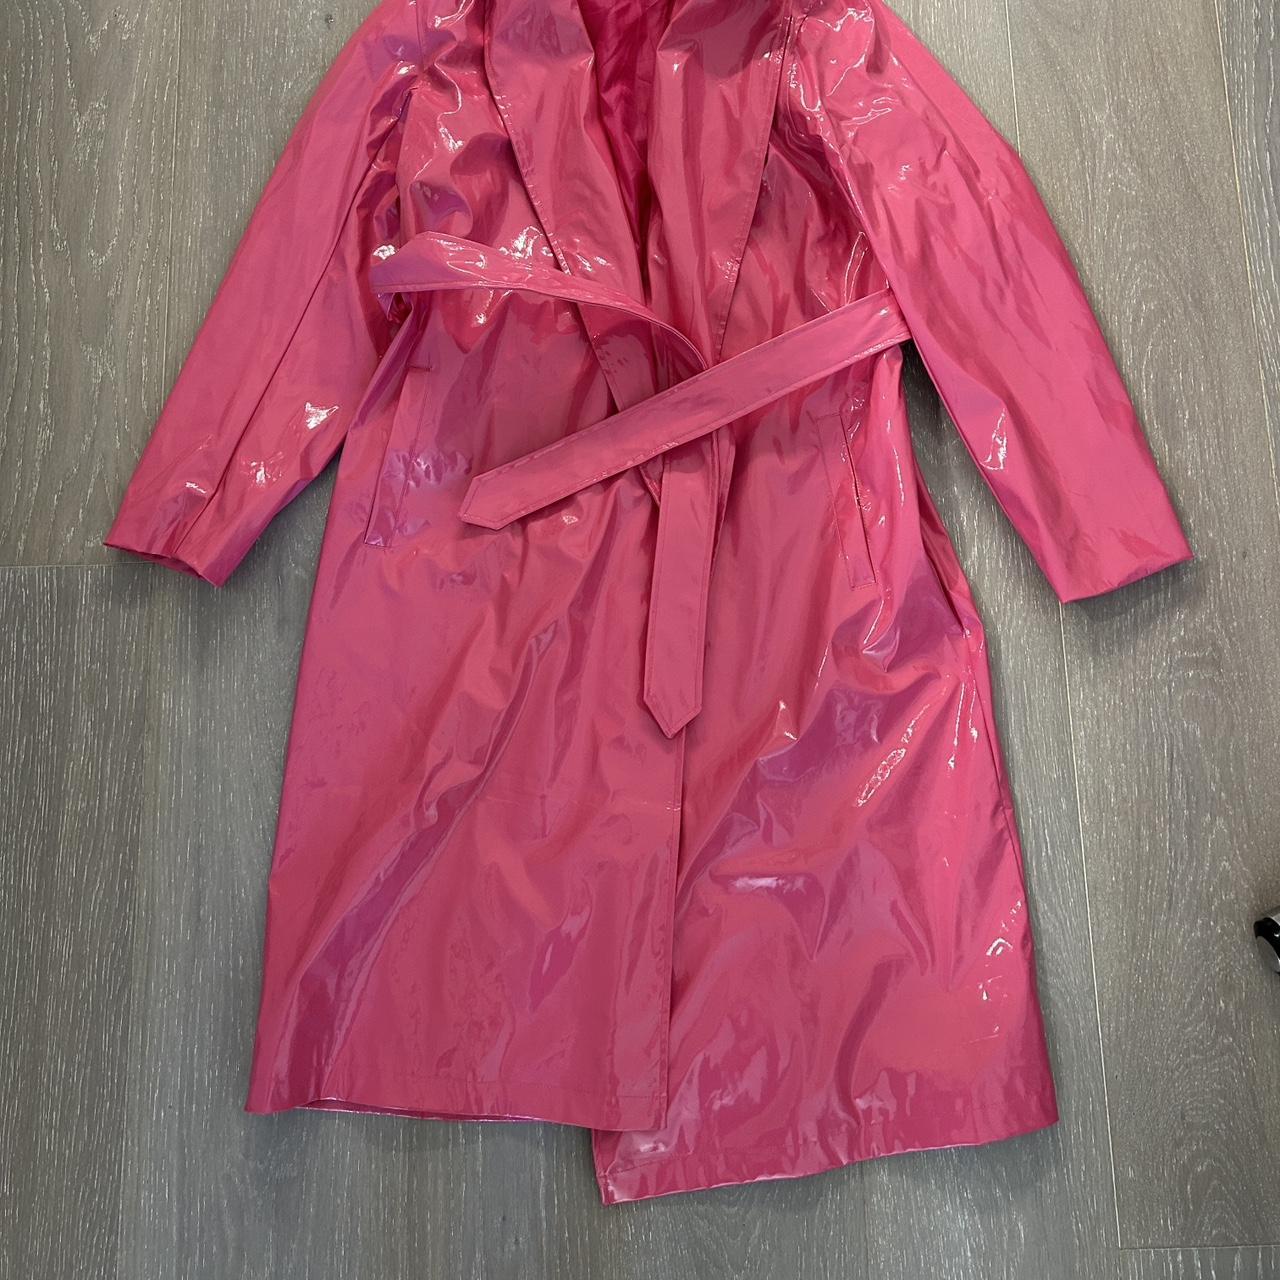 Threadbare val pink vinyl PVC shiny trench coat Mac... - Depop